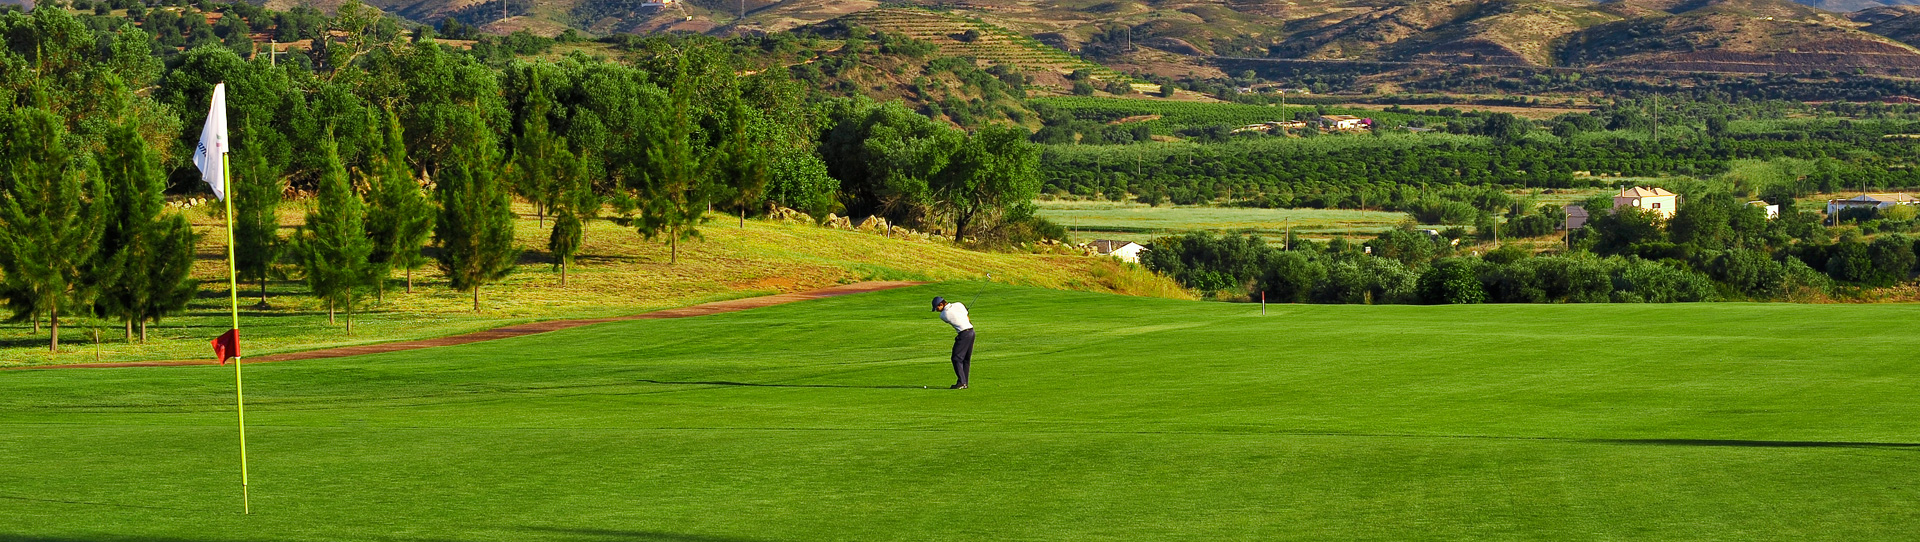 Portugal golf courses - Benamor Golf Course - Photo 3